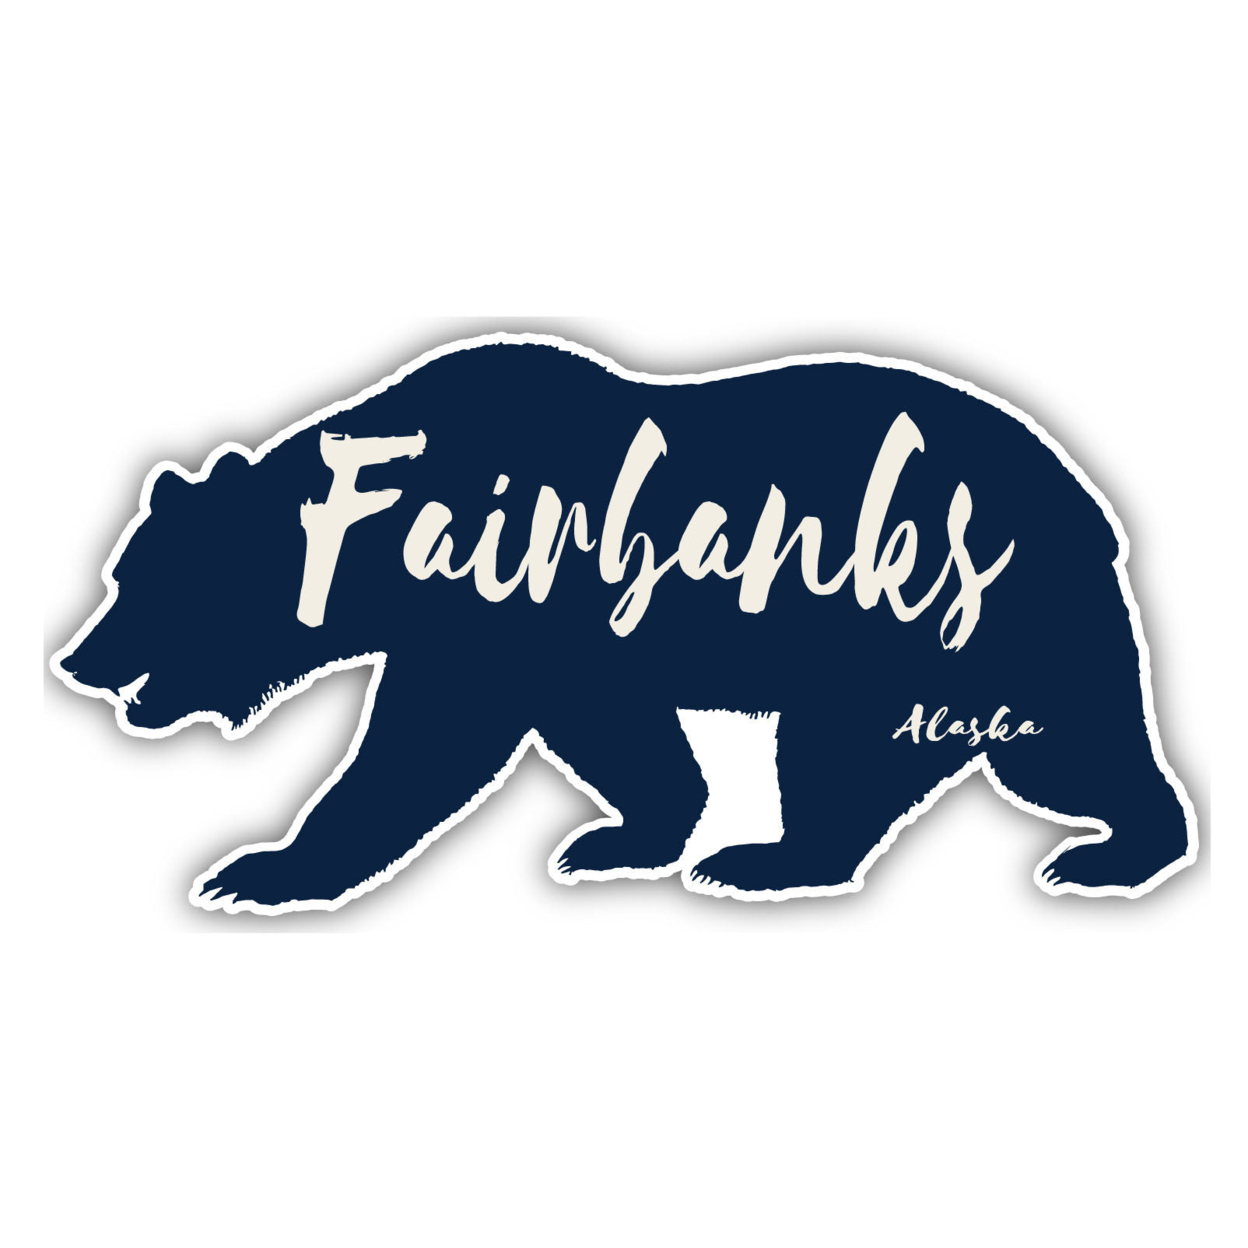 Fairbanks Alaska Souvenir Decorative Stickers (Choose Theme And Size) - 4-Pack, 12-Inch, Bear